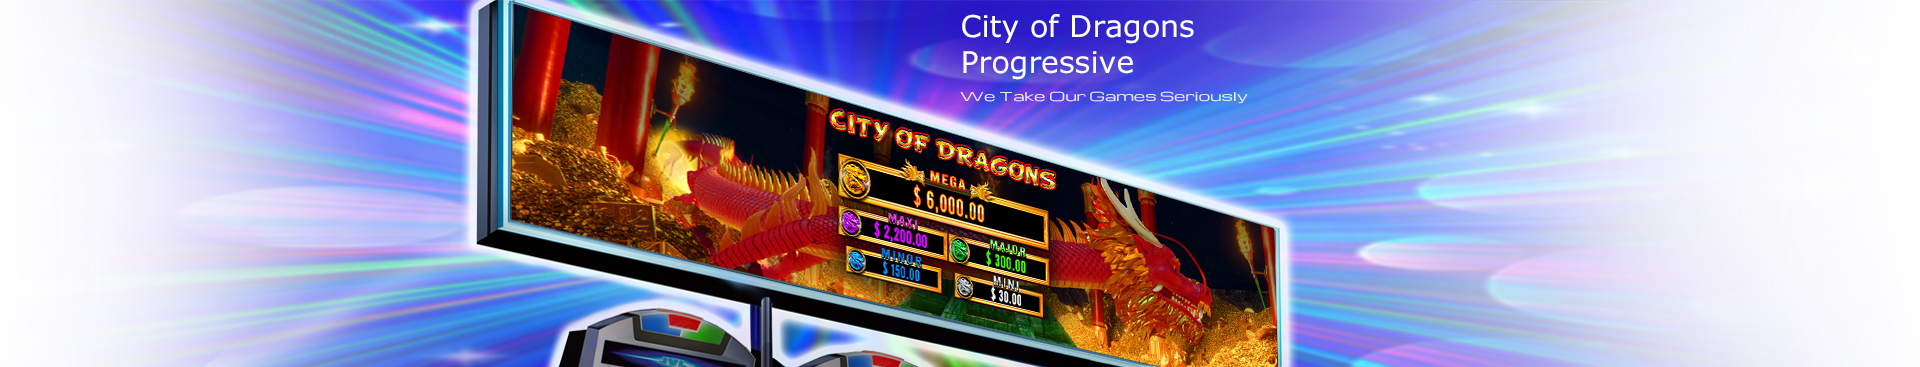 city-of-dragons